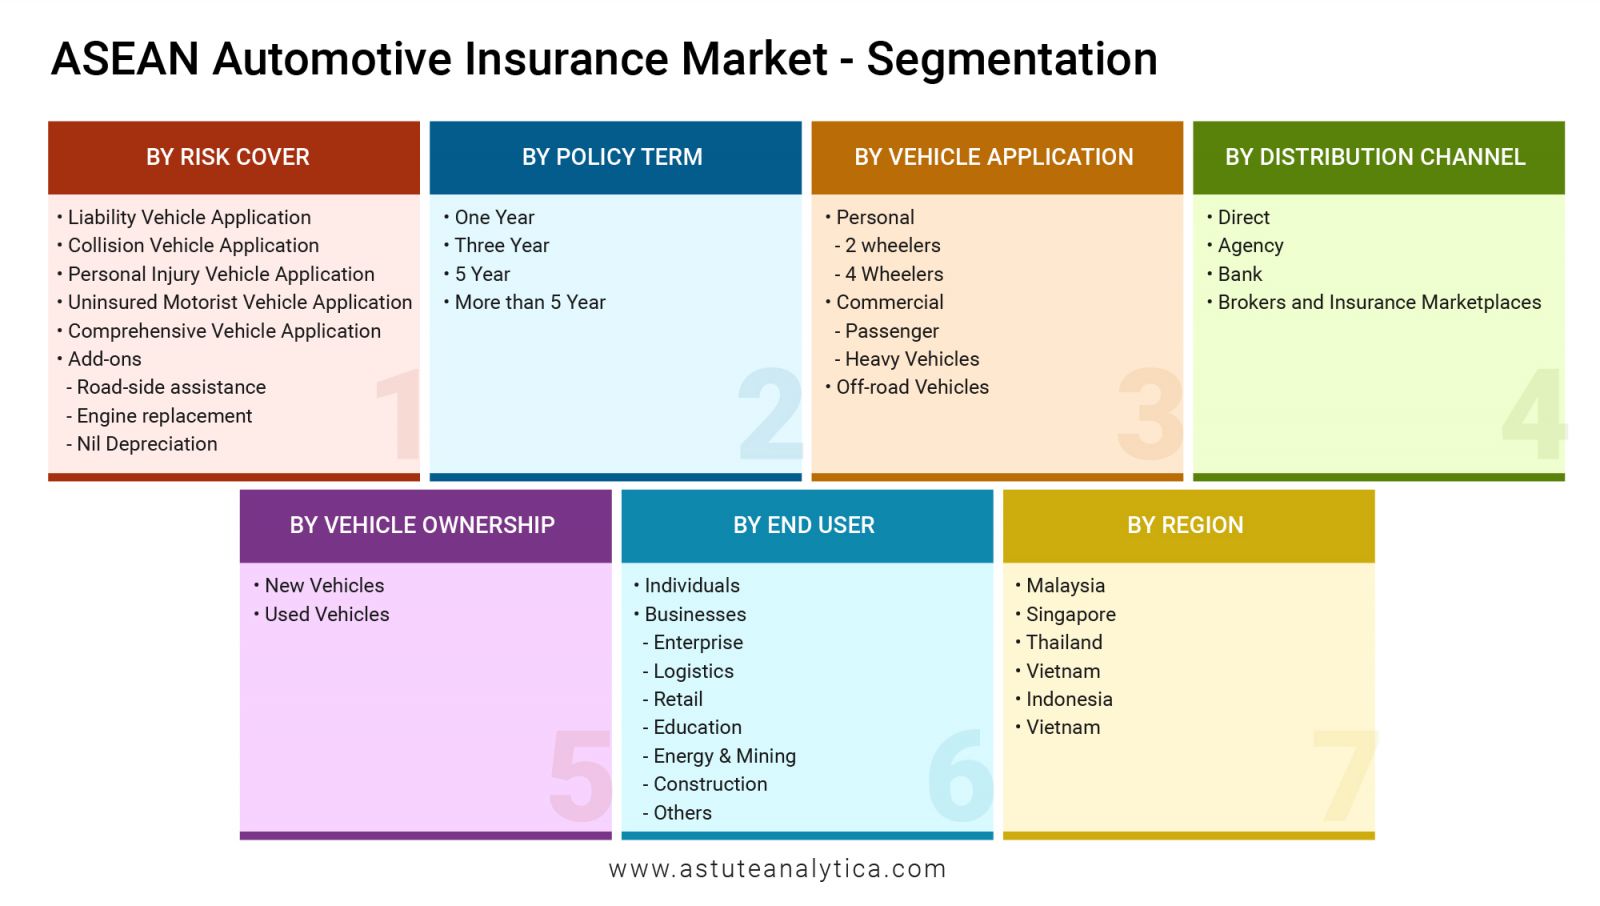 ASEAN automotive insurance market segmentation